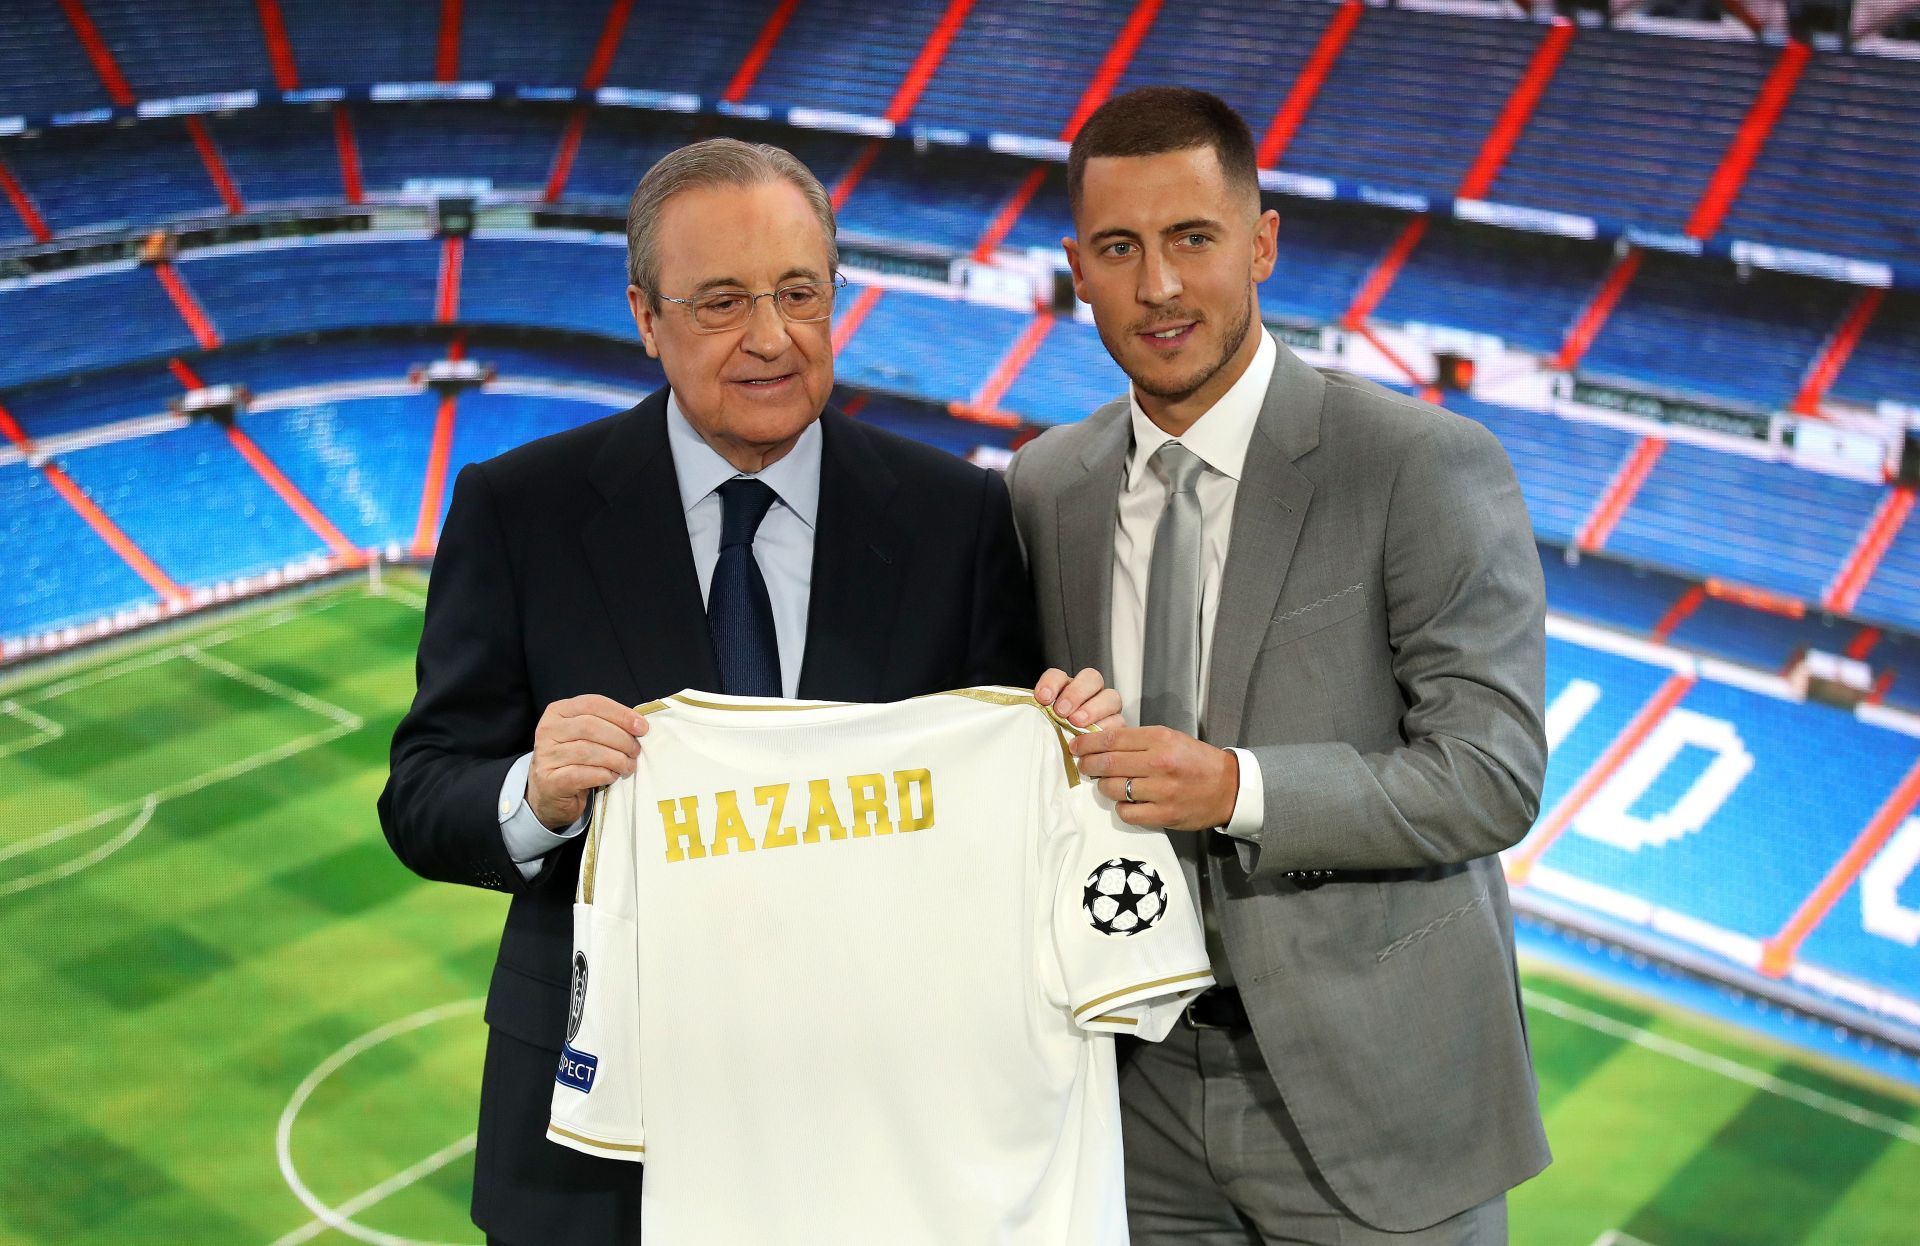 Eden Hazard being unveiled by Real Madrid